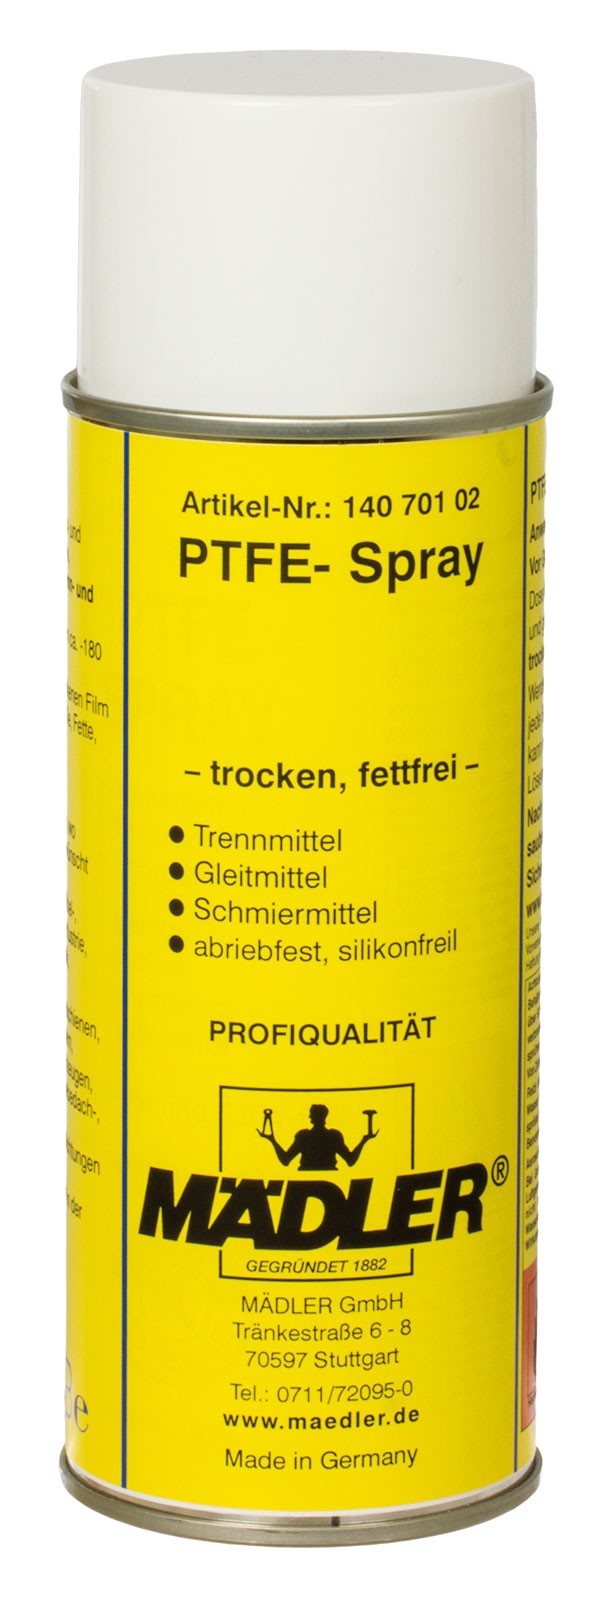 PTFE Spray Archives - Maedler North America